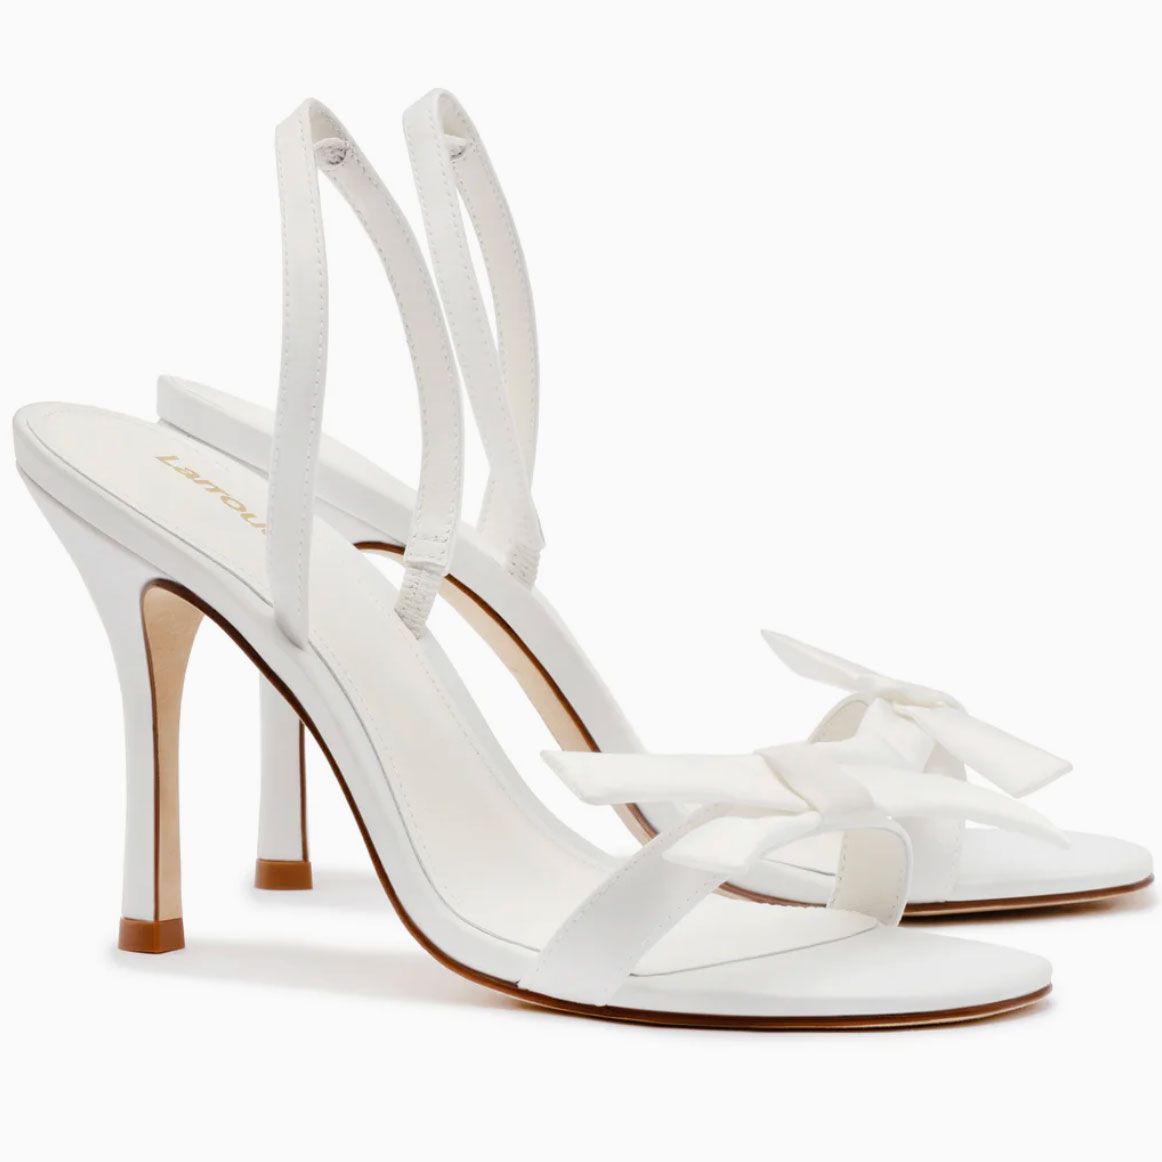 Larroudé x Markarian Bridal Sandals in White Satin